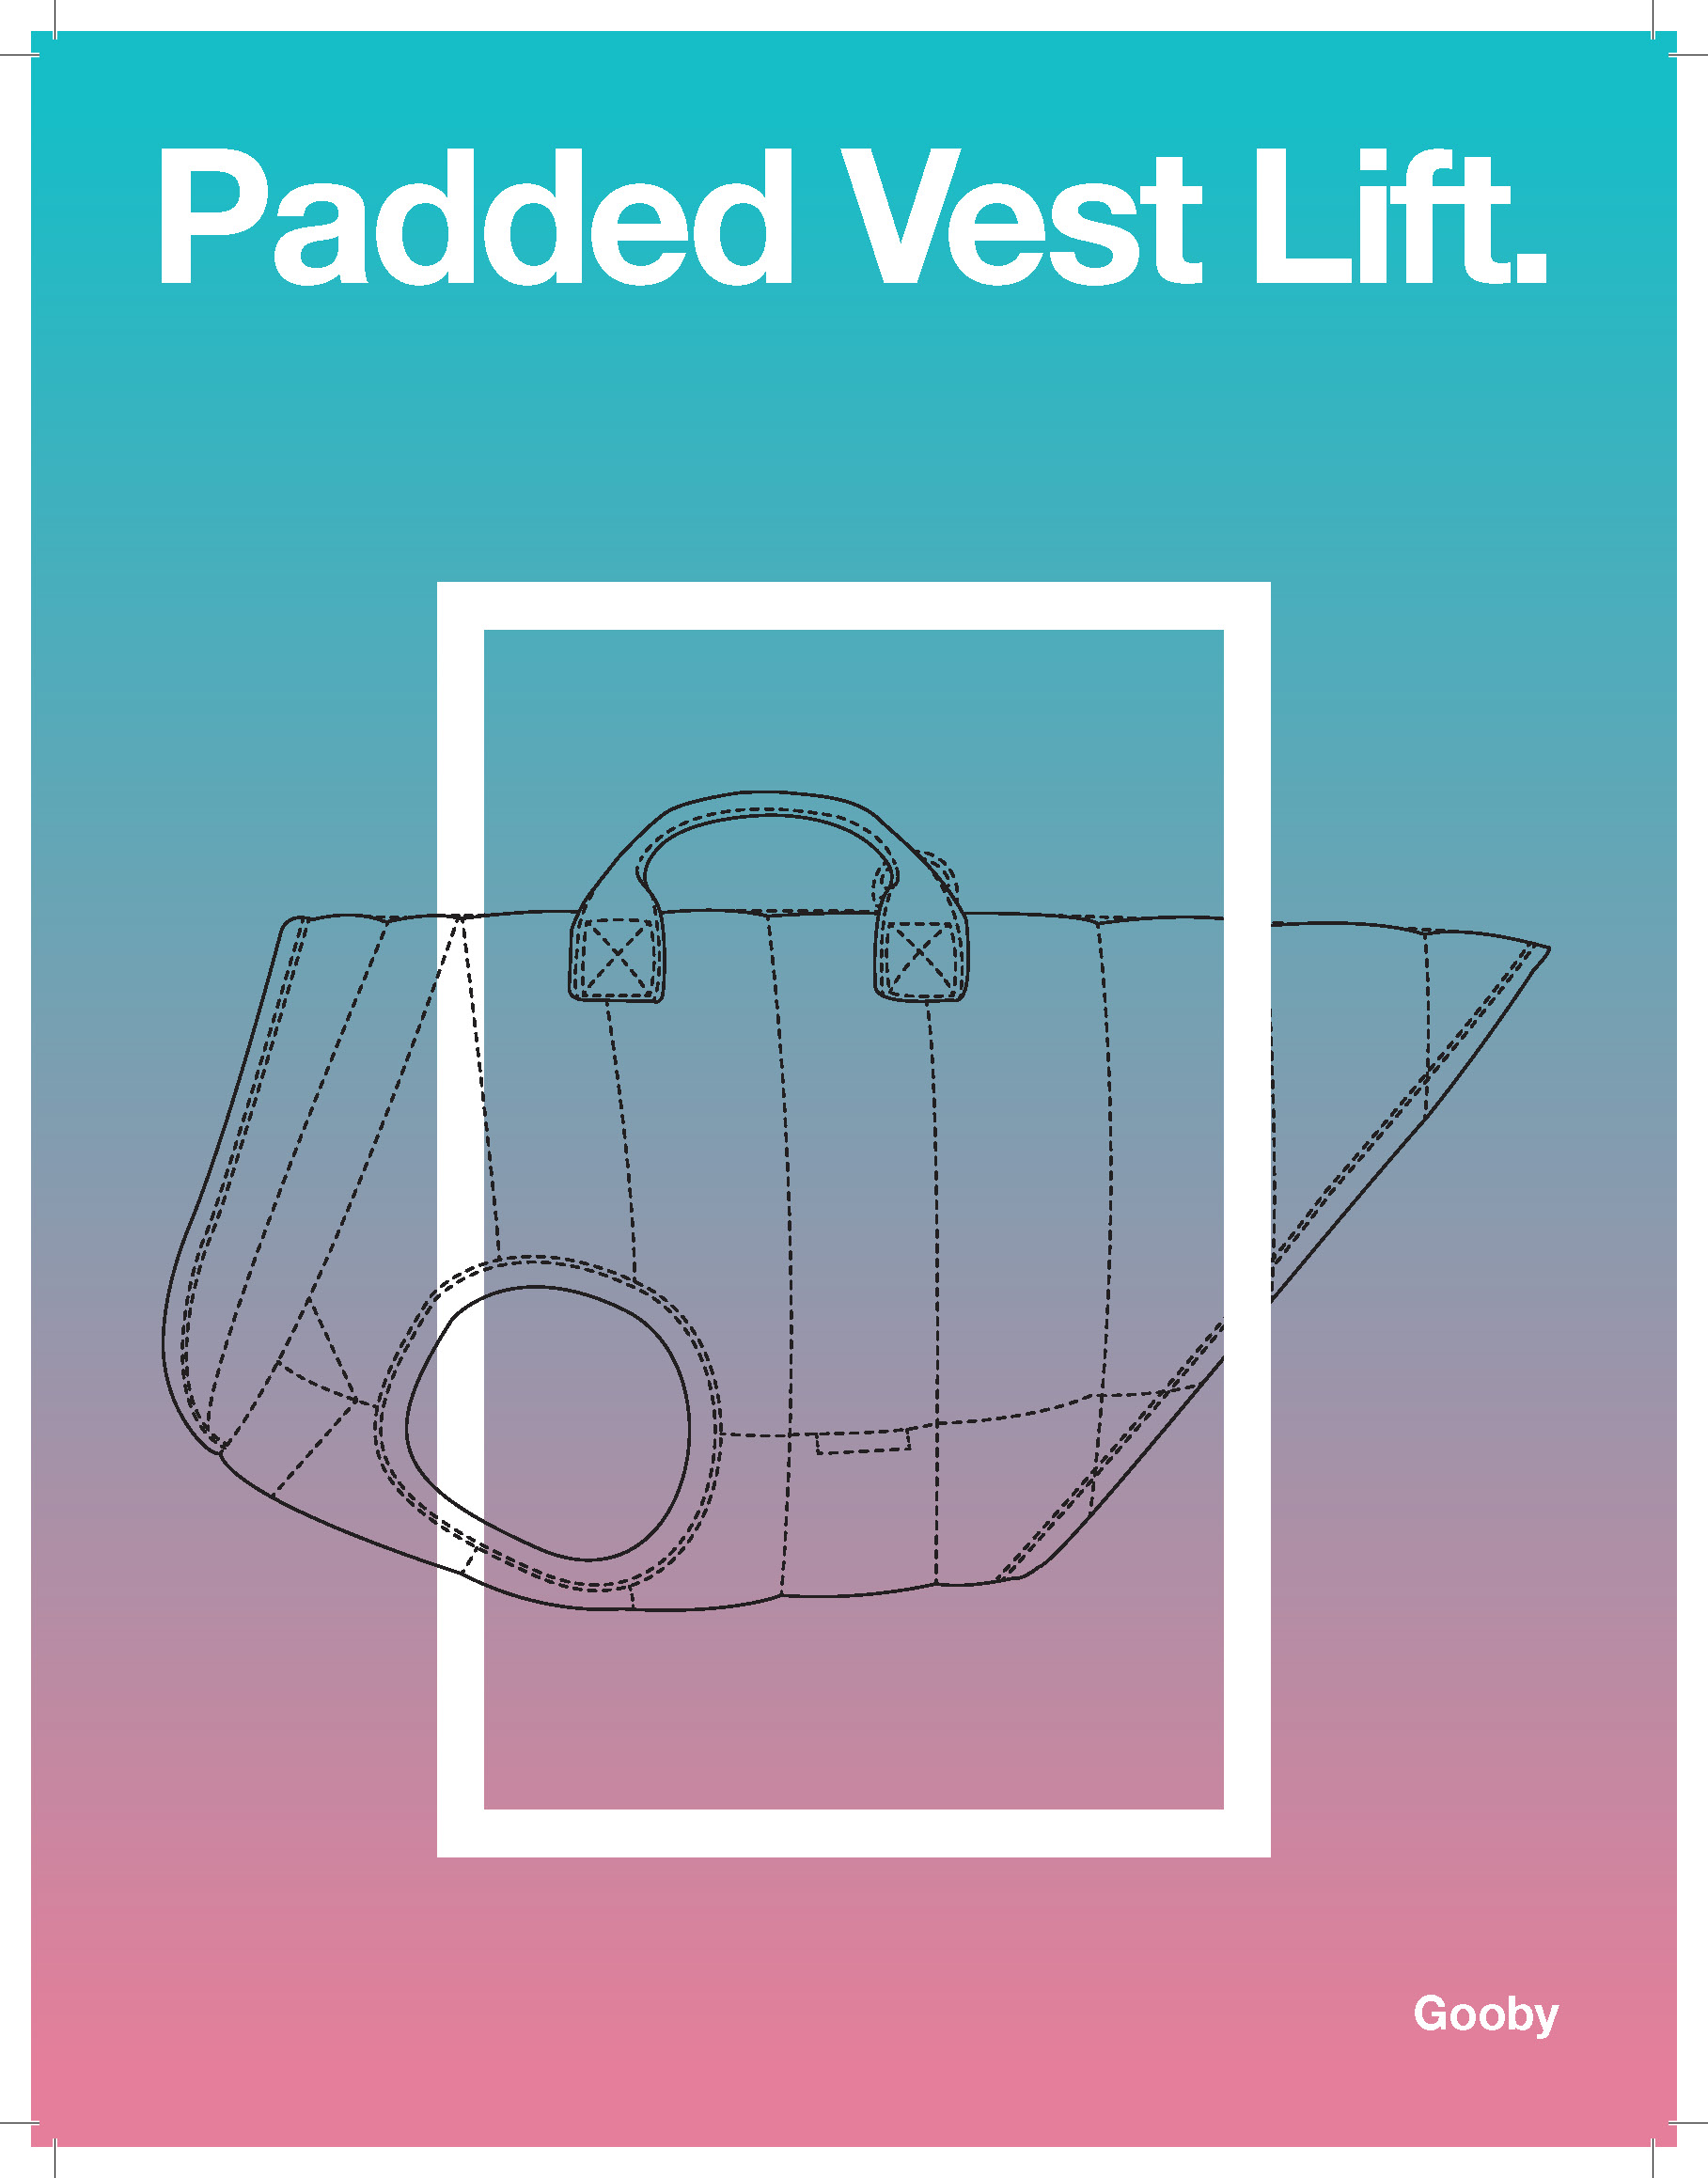 padded vest lift_Page_8.jpg